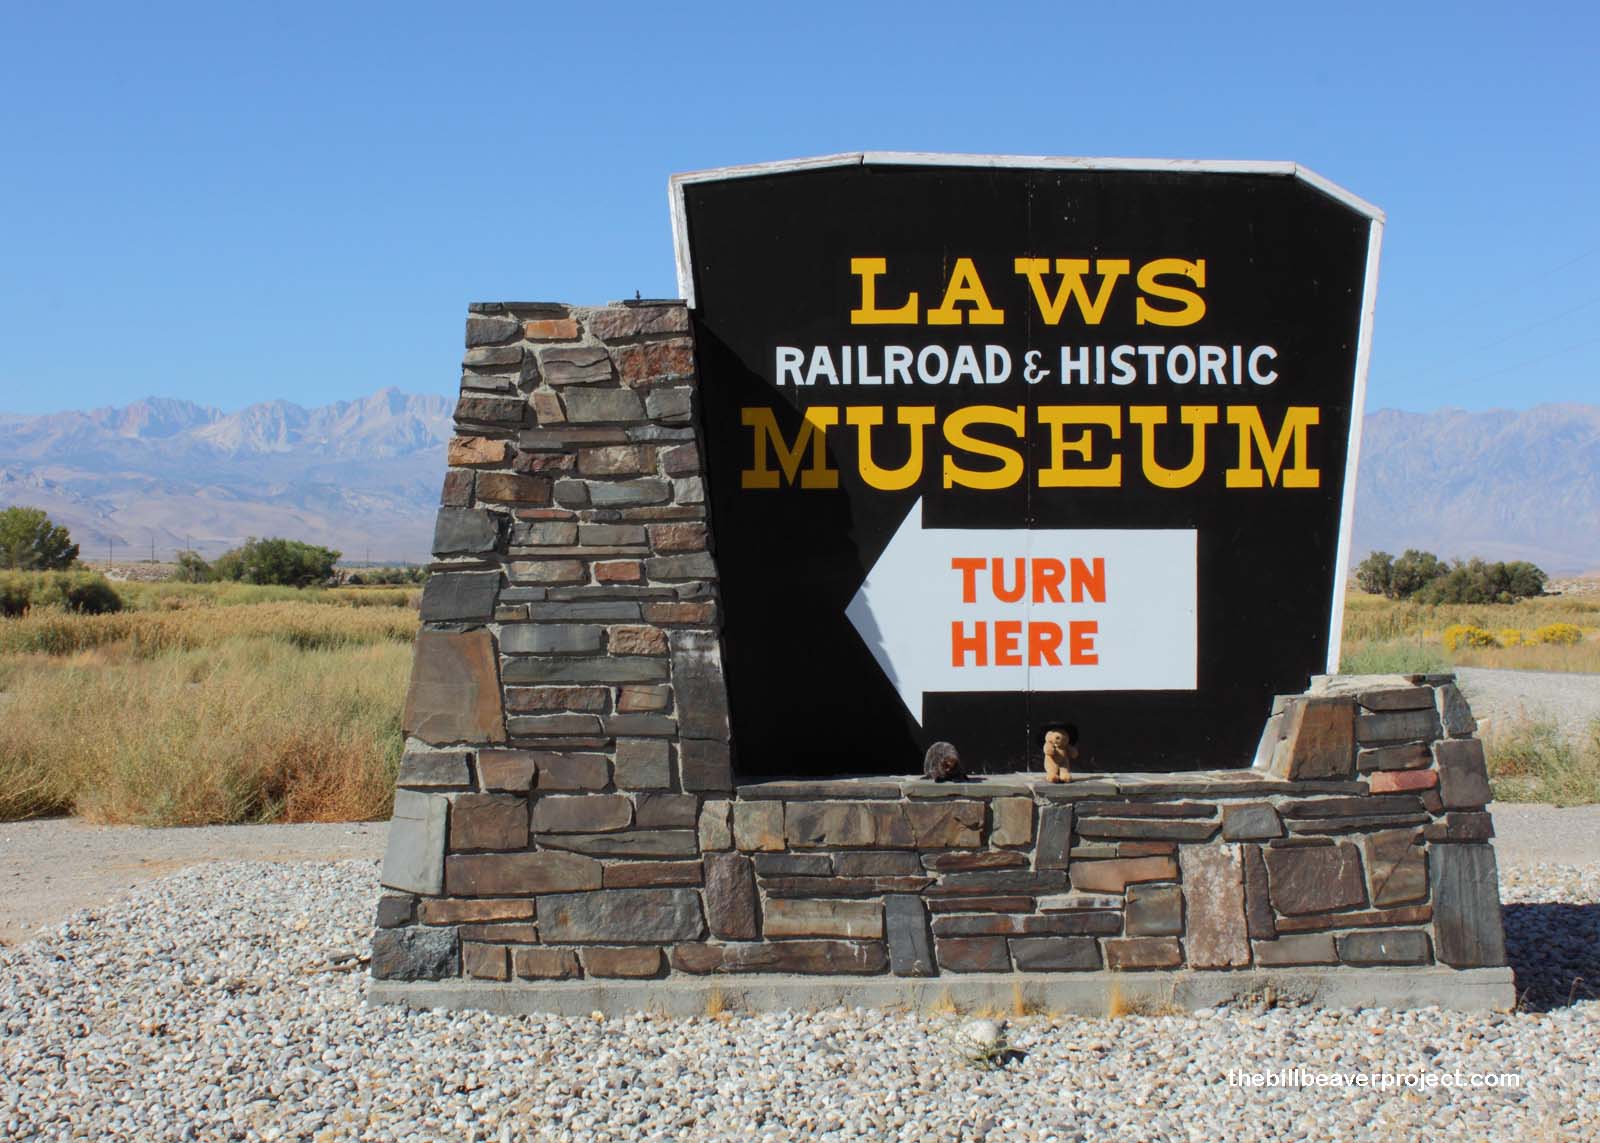 Laws Narrow Gauge Railroad Station and Yard